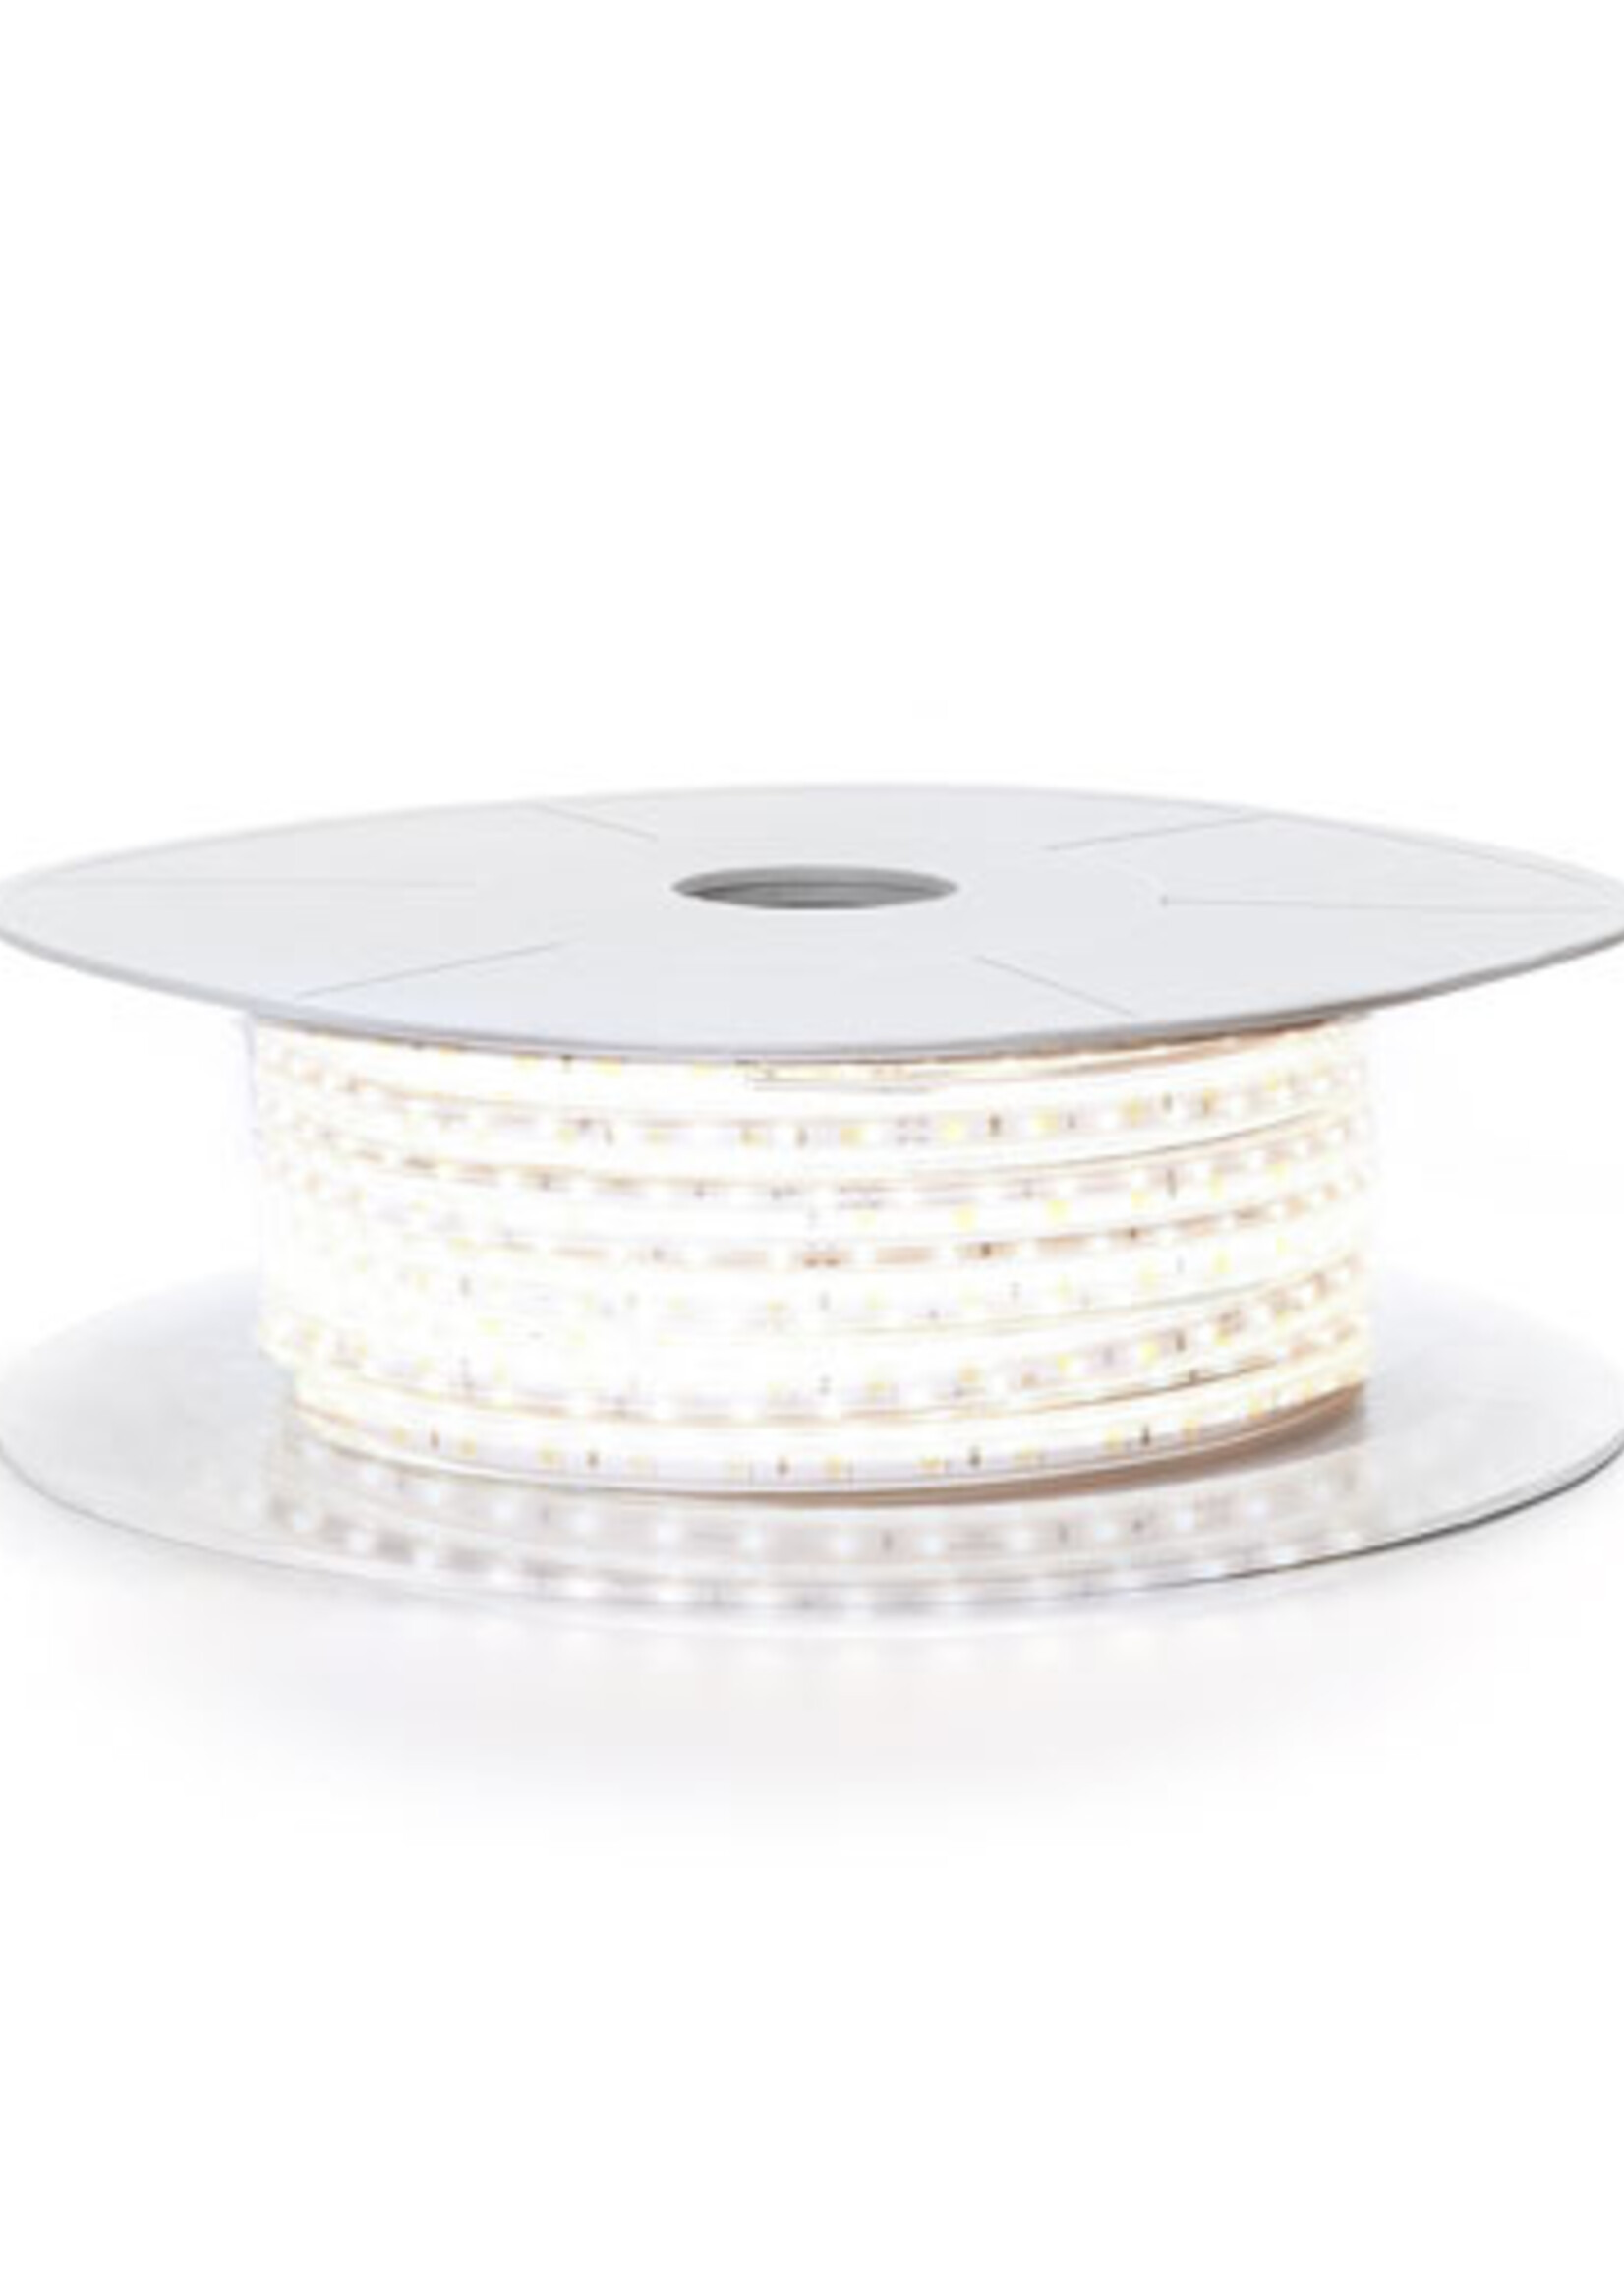 LEDWINKEL-Online LED Strip 50 meter IP65 Basic-60 LEDS/m 220V